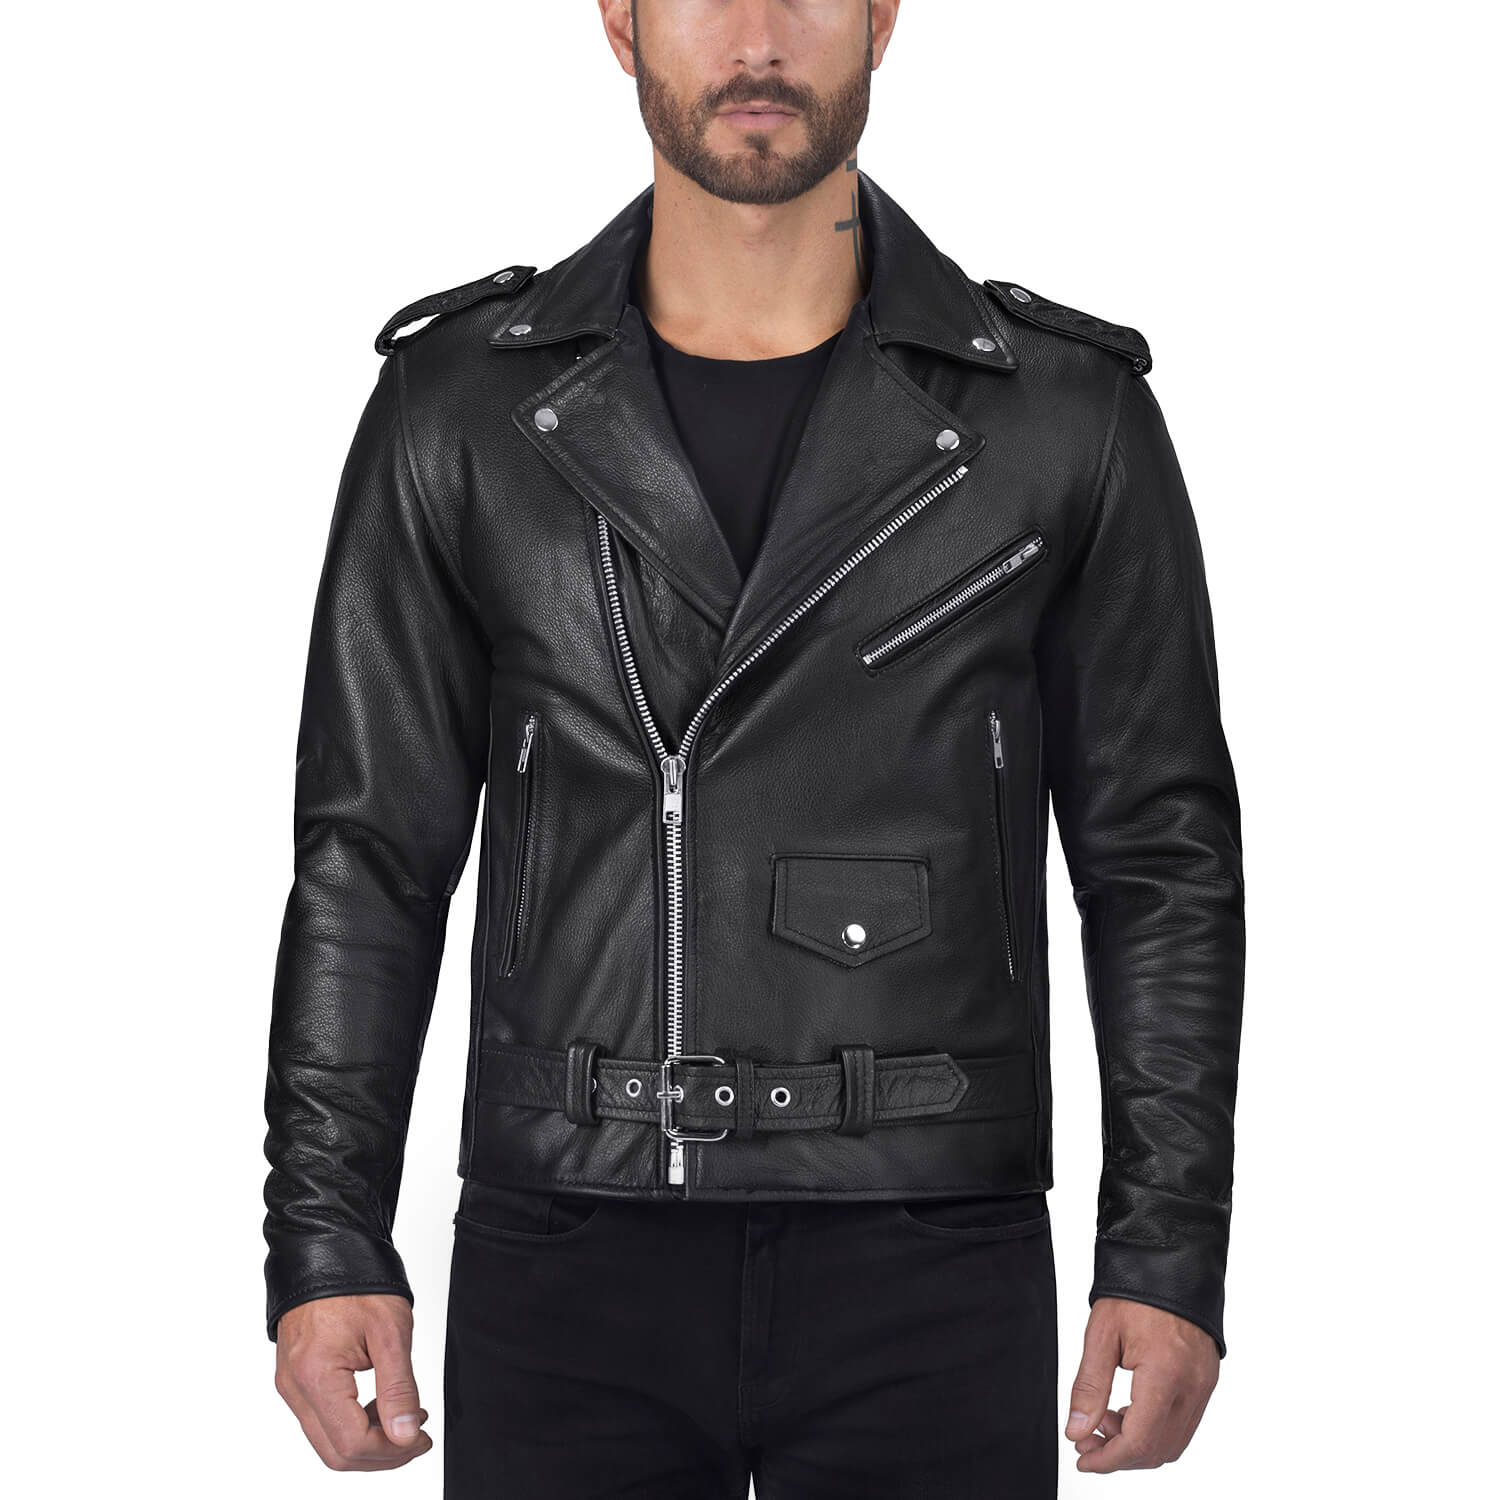 Slim Fit Leather Jacket in Biker Style for Men